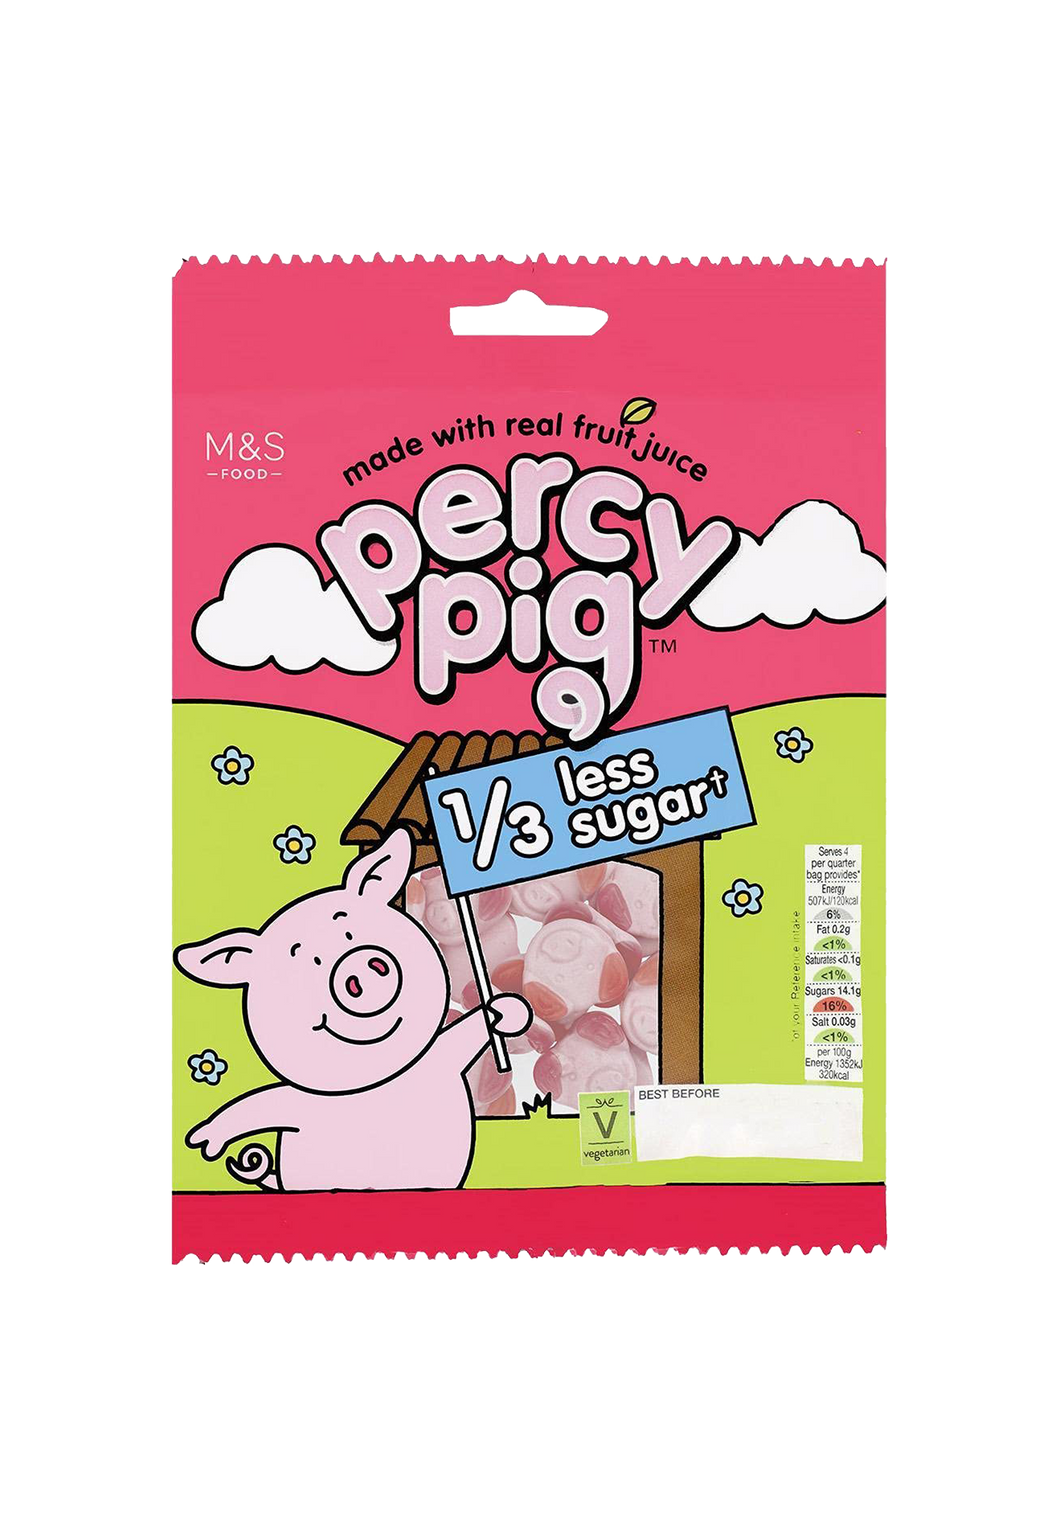 Percy Pig 1/3 less sugar 150g